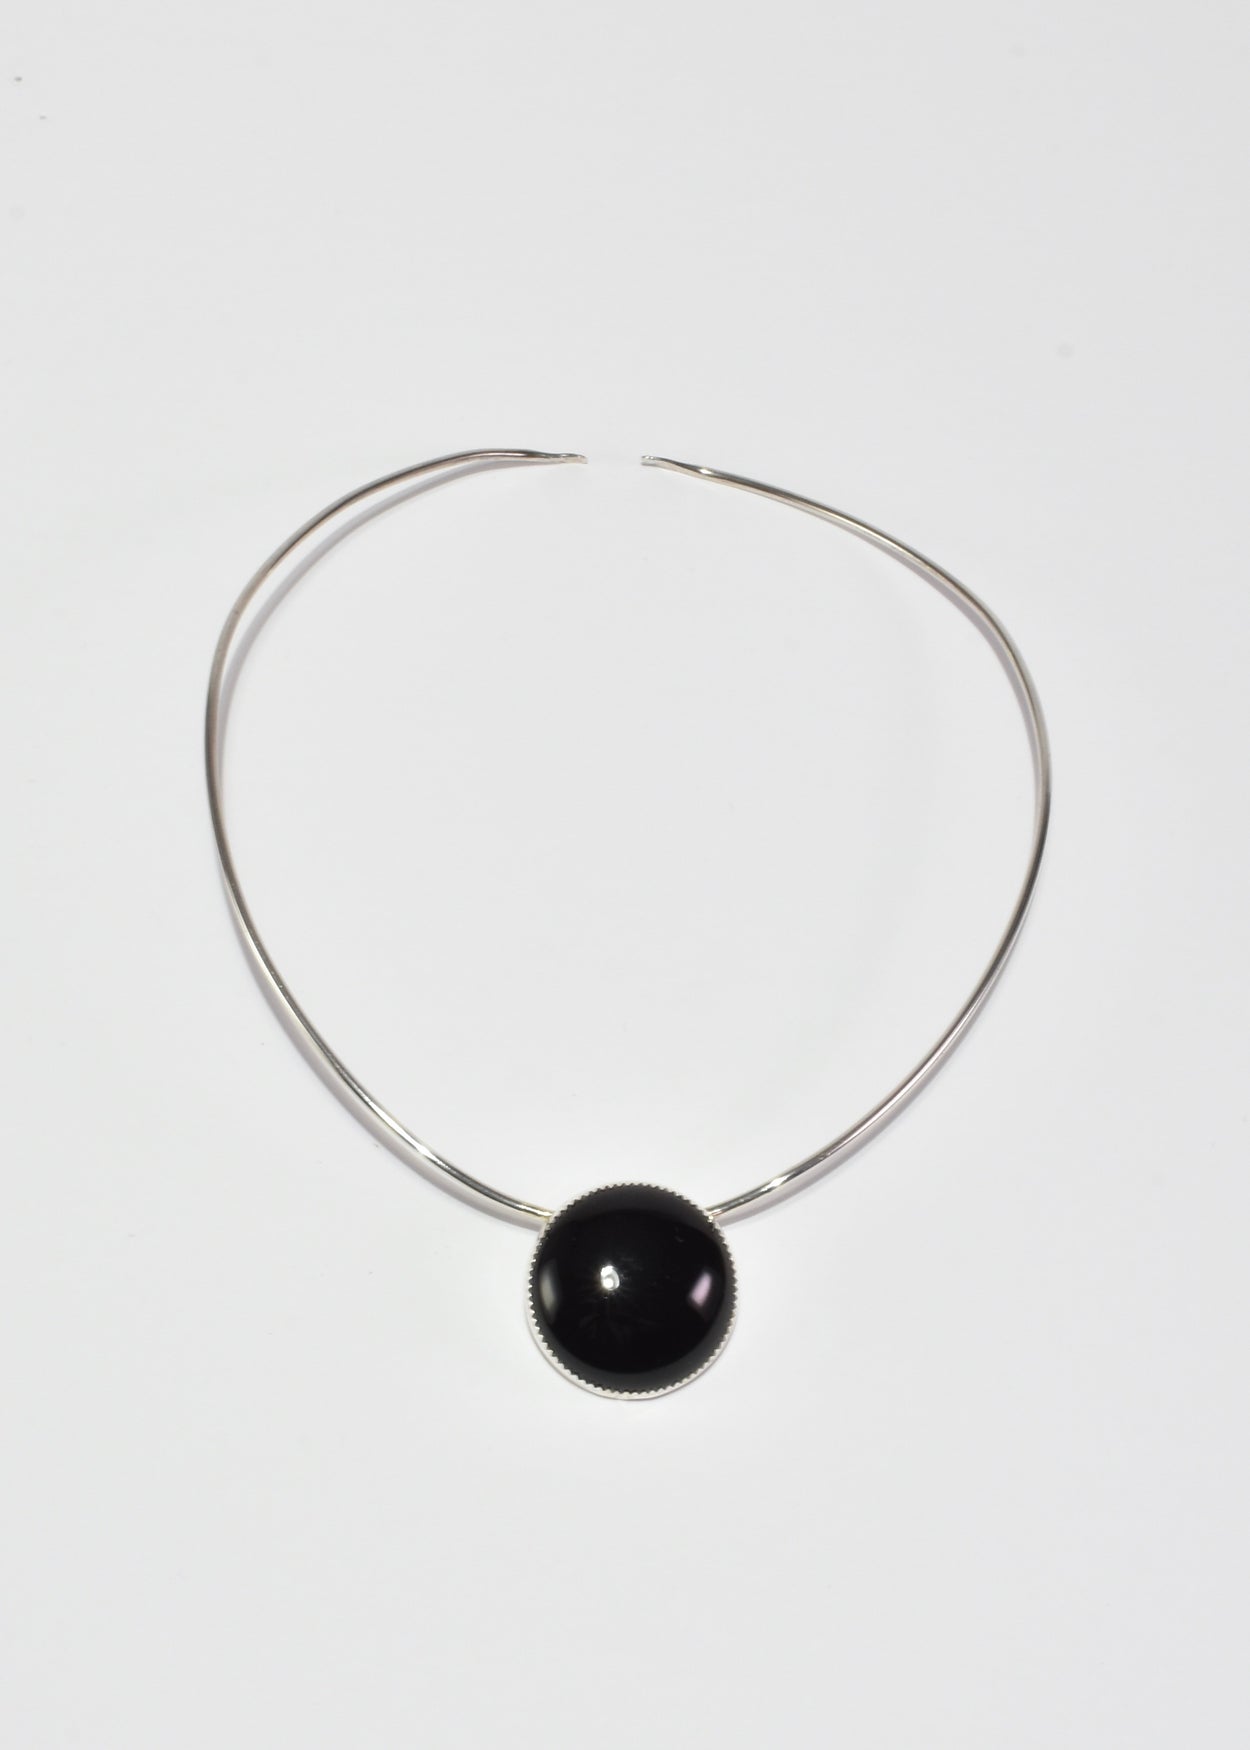 Onyx Collar Necklace